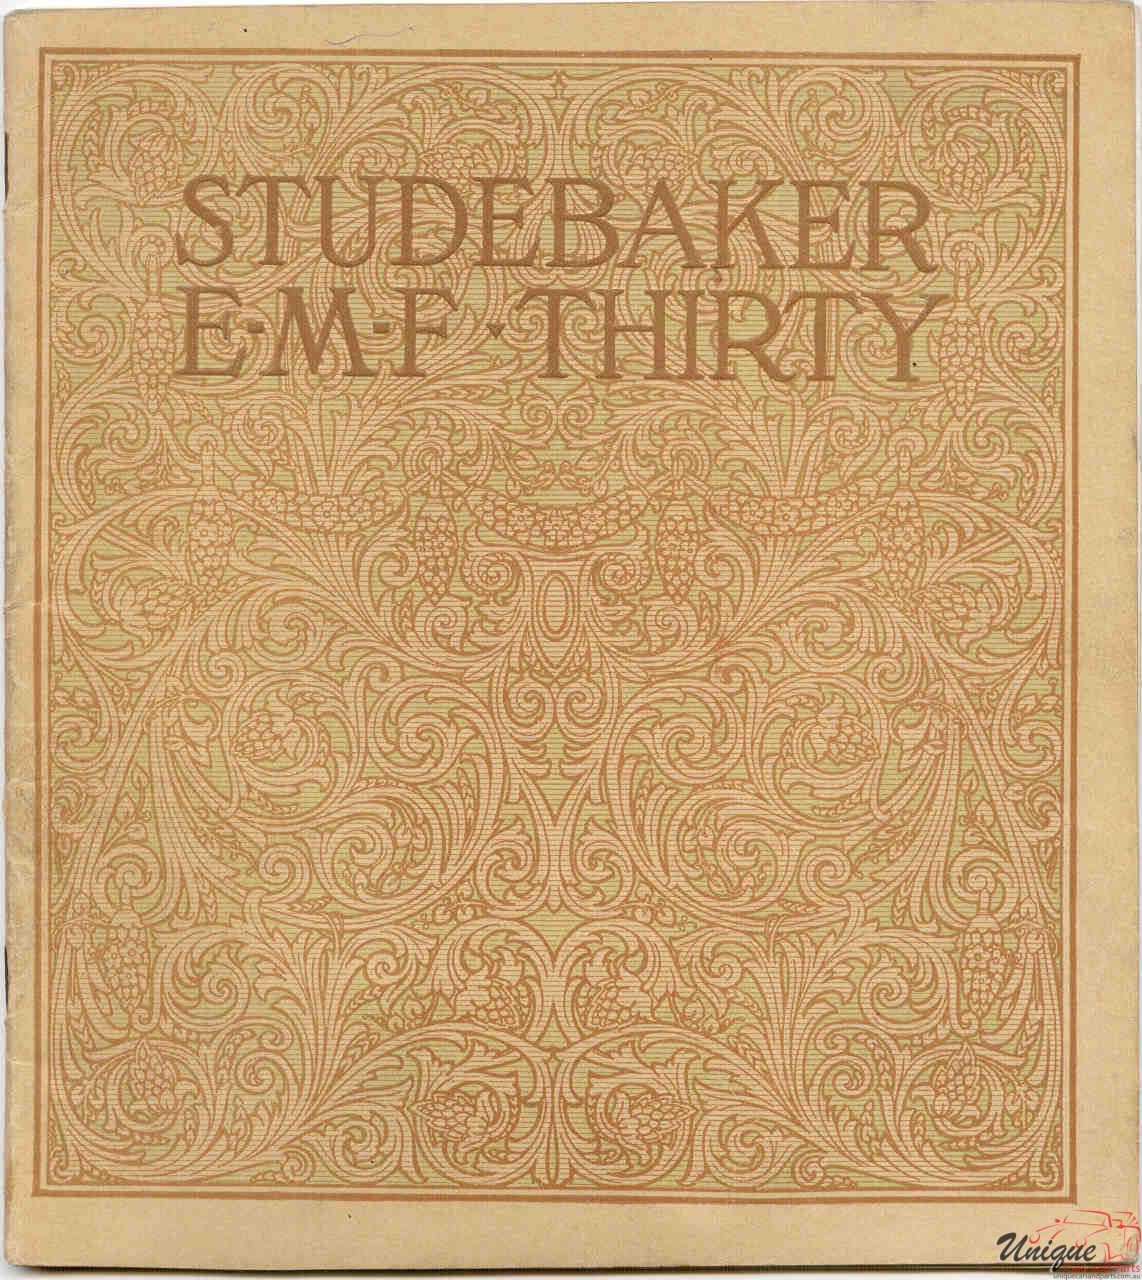 1912 Studebaker E-M-F 30 Brochure Page 20